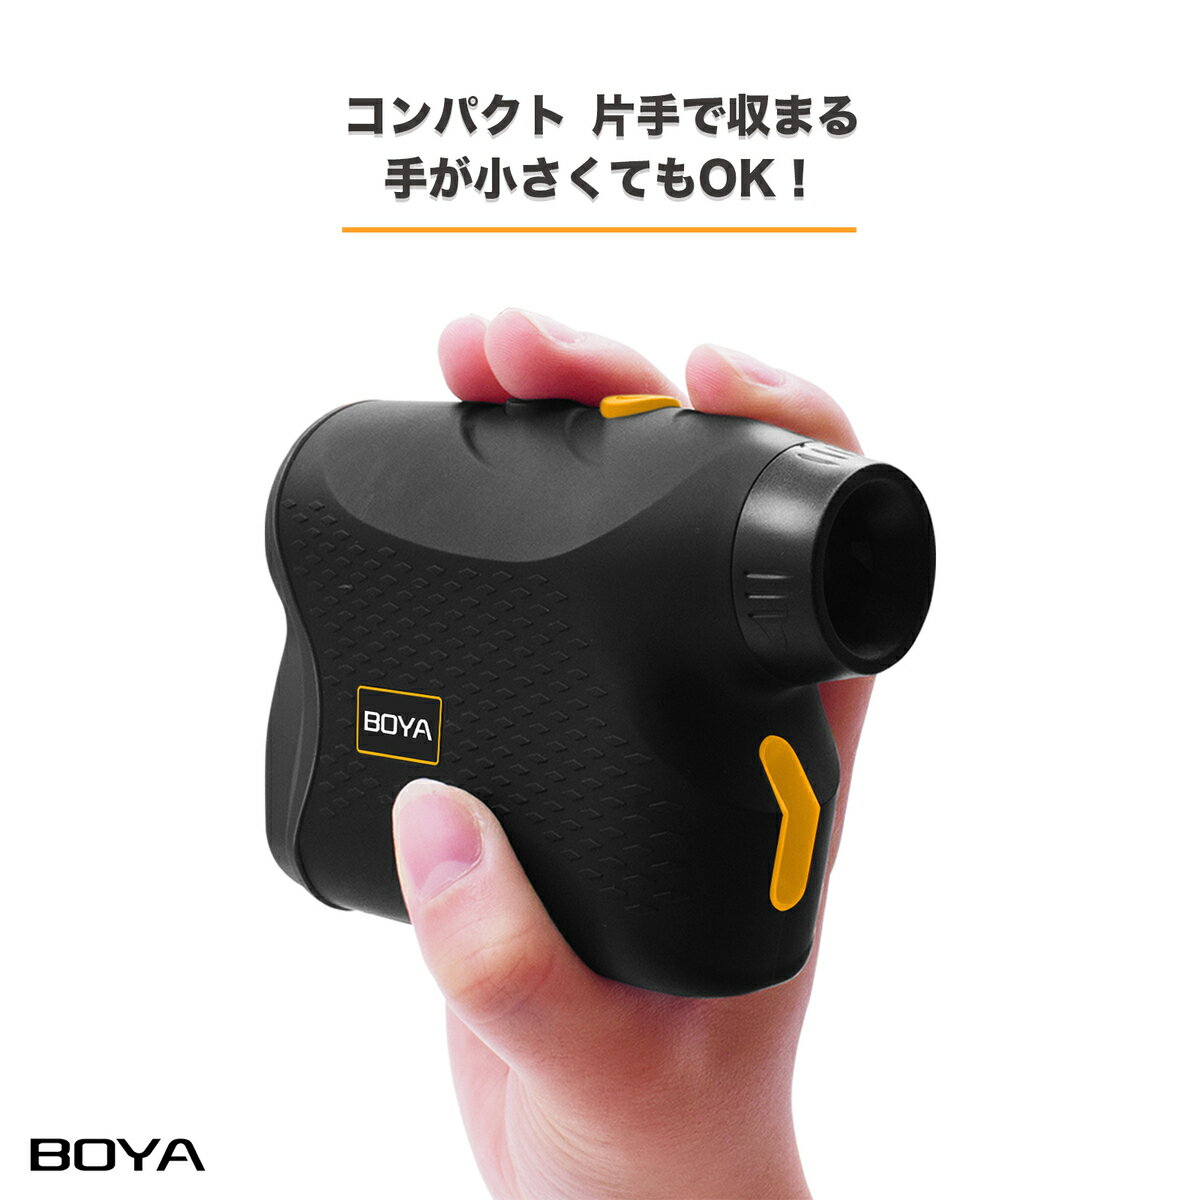 BOYA ゴルフ レーザー距離計 1100ydまで対応 スロープ距離 高低差機能 スコープ 距離測定器 日本語取扱説明書 1 正規品 LR1000P コンパクト 連続測定 防塵 防滴性能